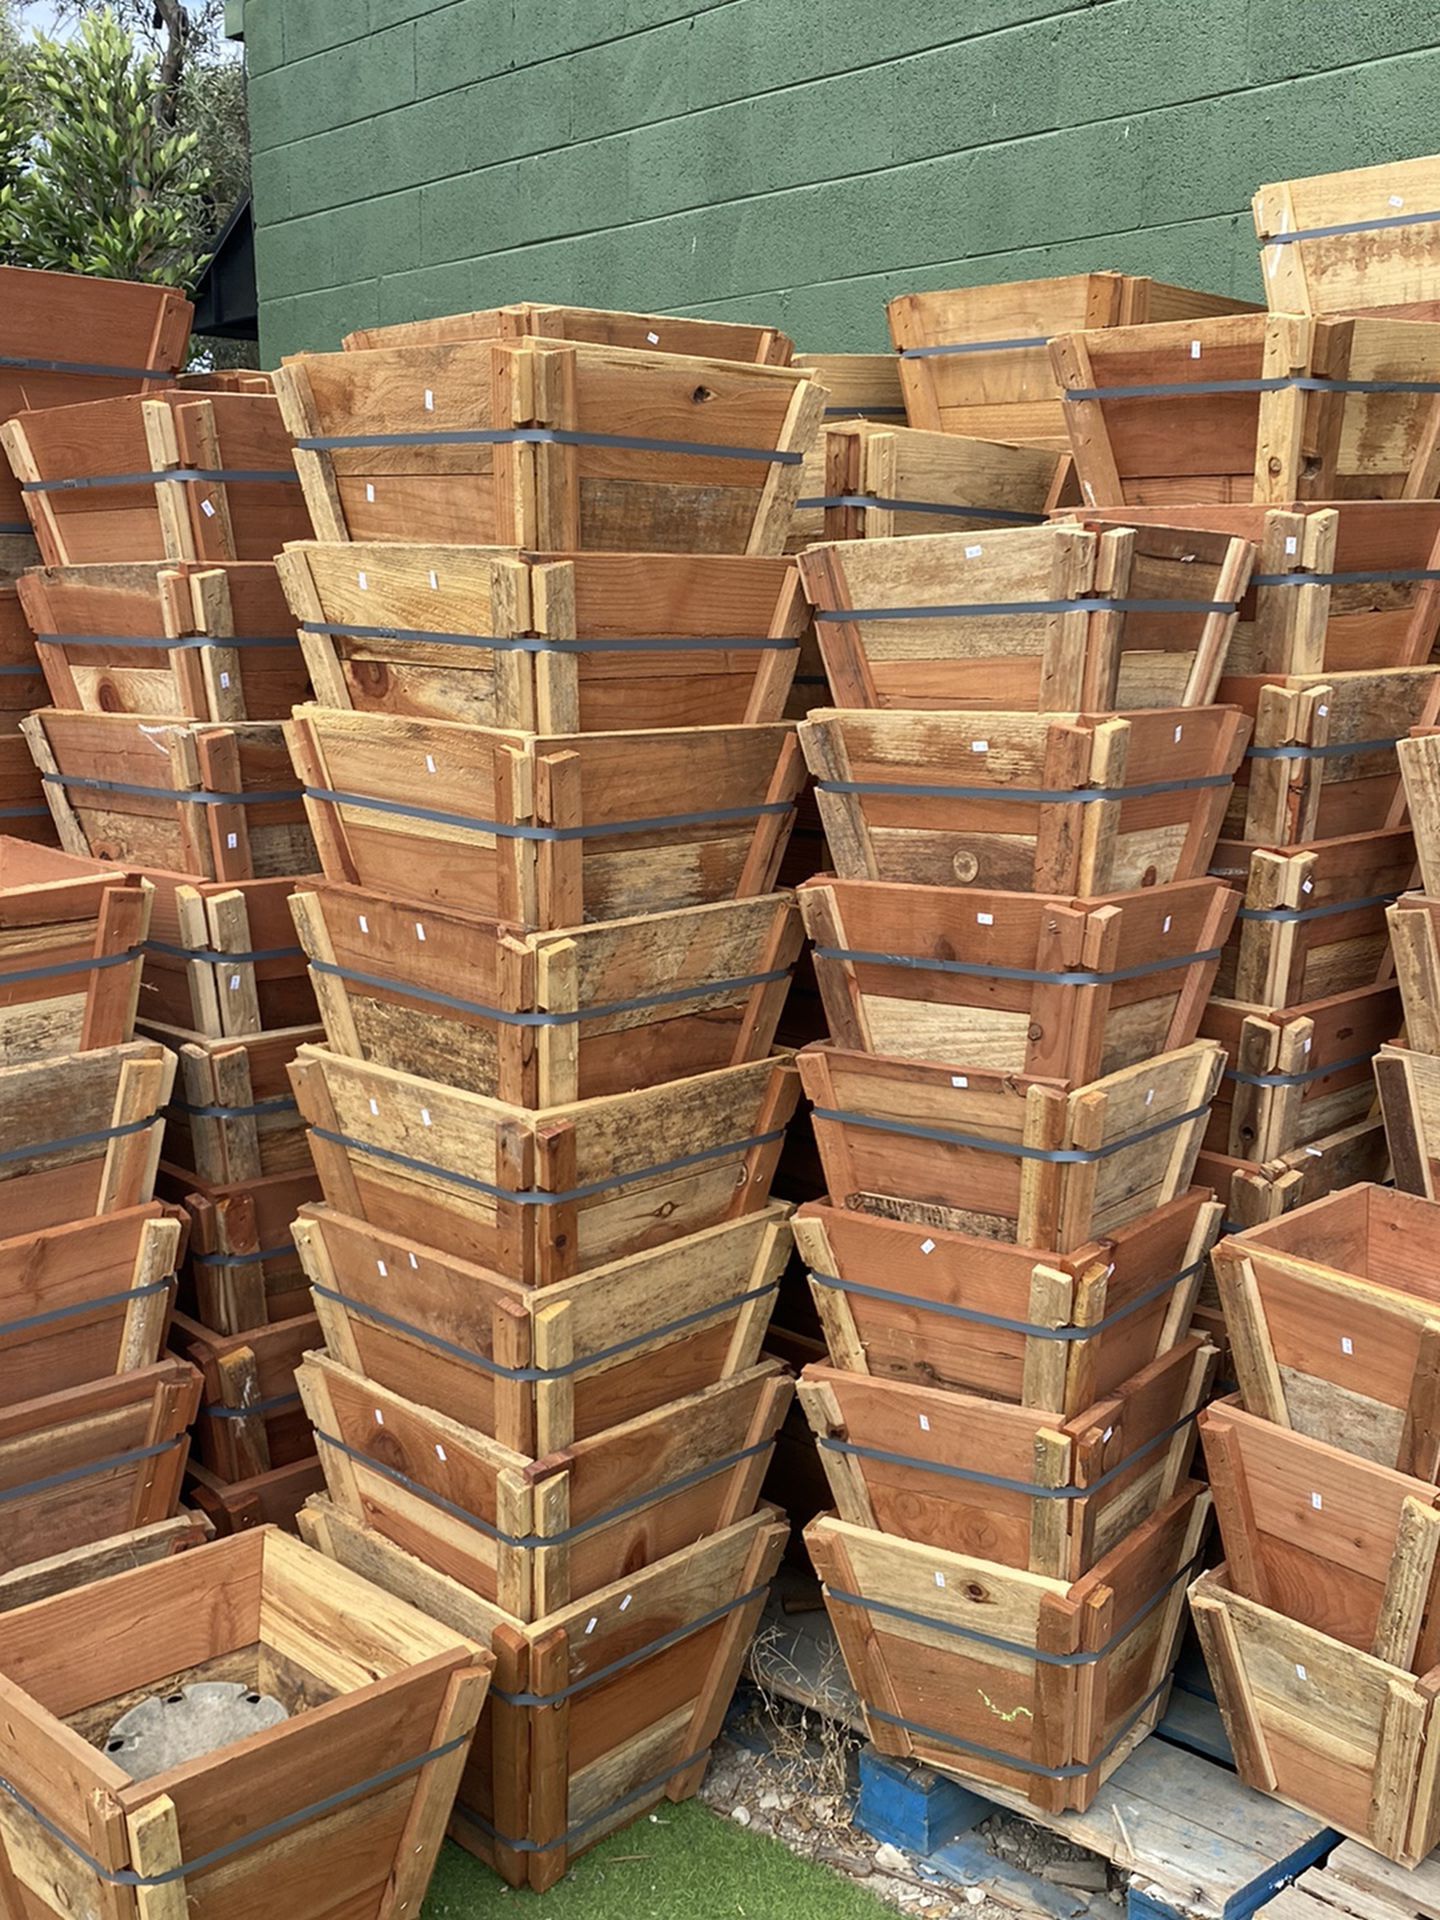 Redwood Planter Boxes for Herbs/Veggies/Trees/Plants/Light poles Starting @$19